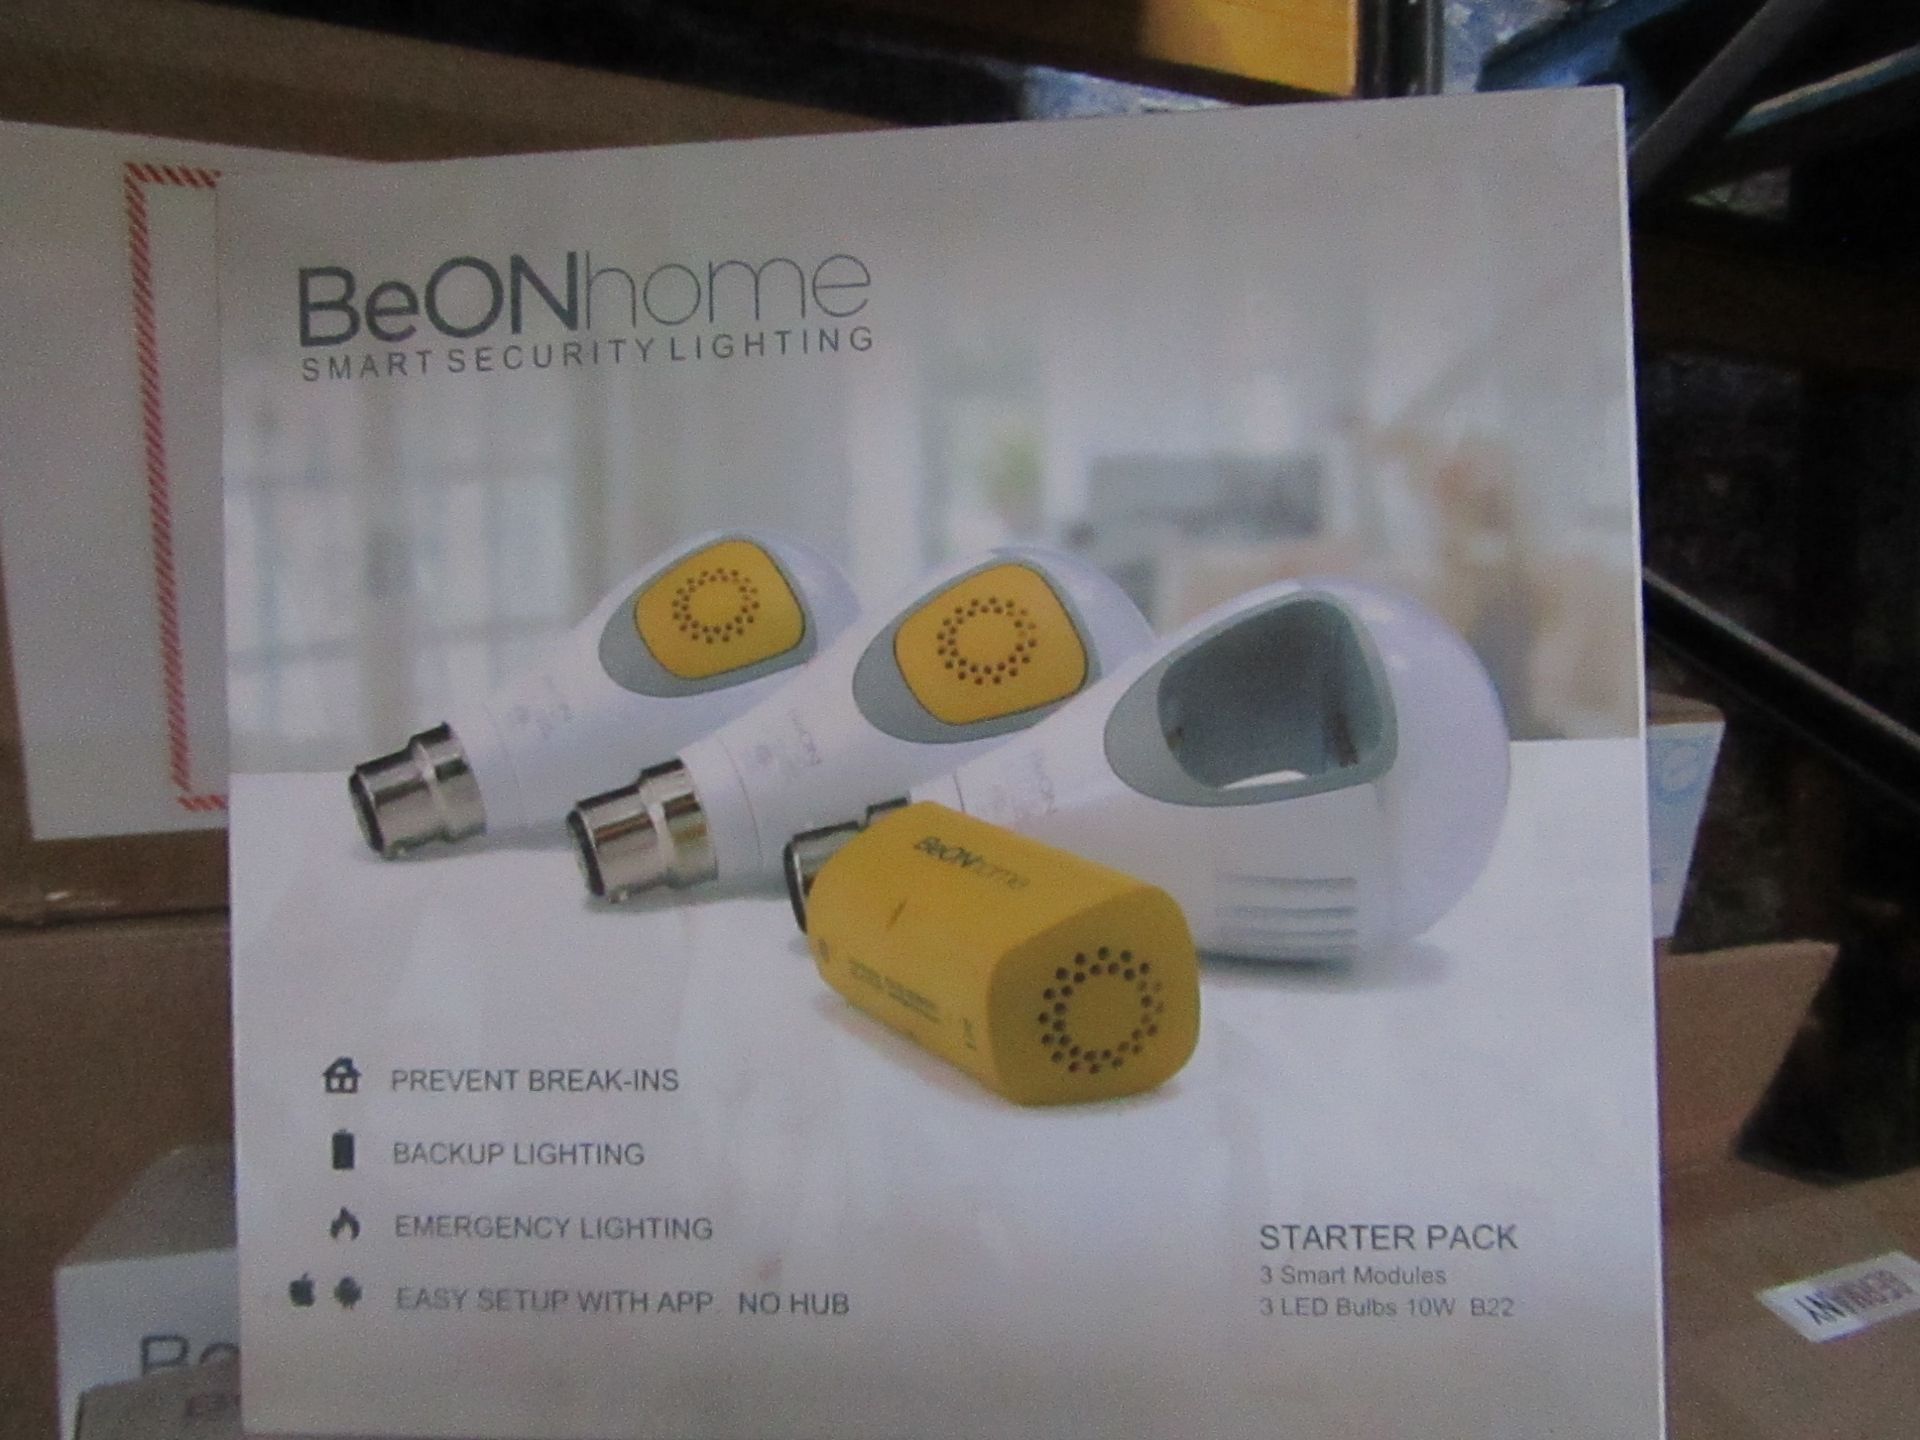 BeONhome smart security light starter set, includes 3x light bu;bs and 3x smart modules, fgeatuers